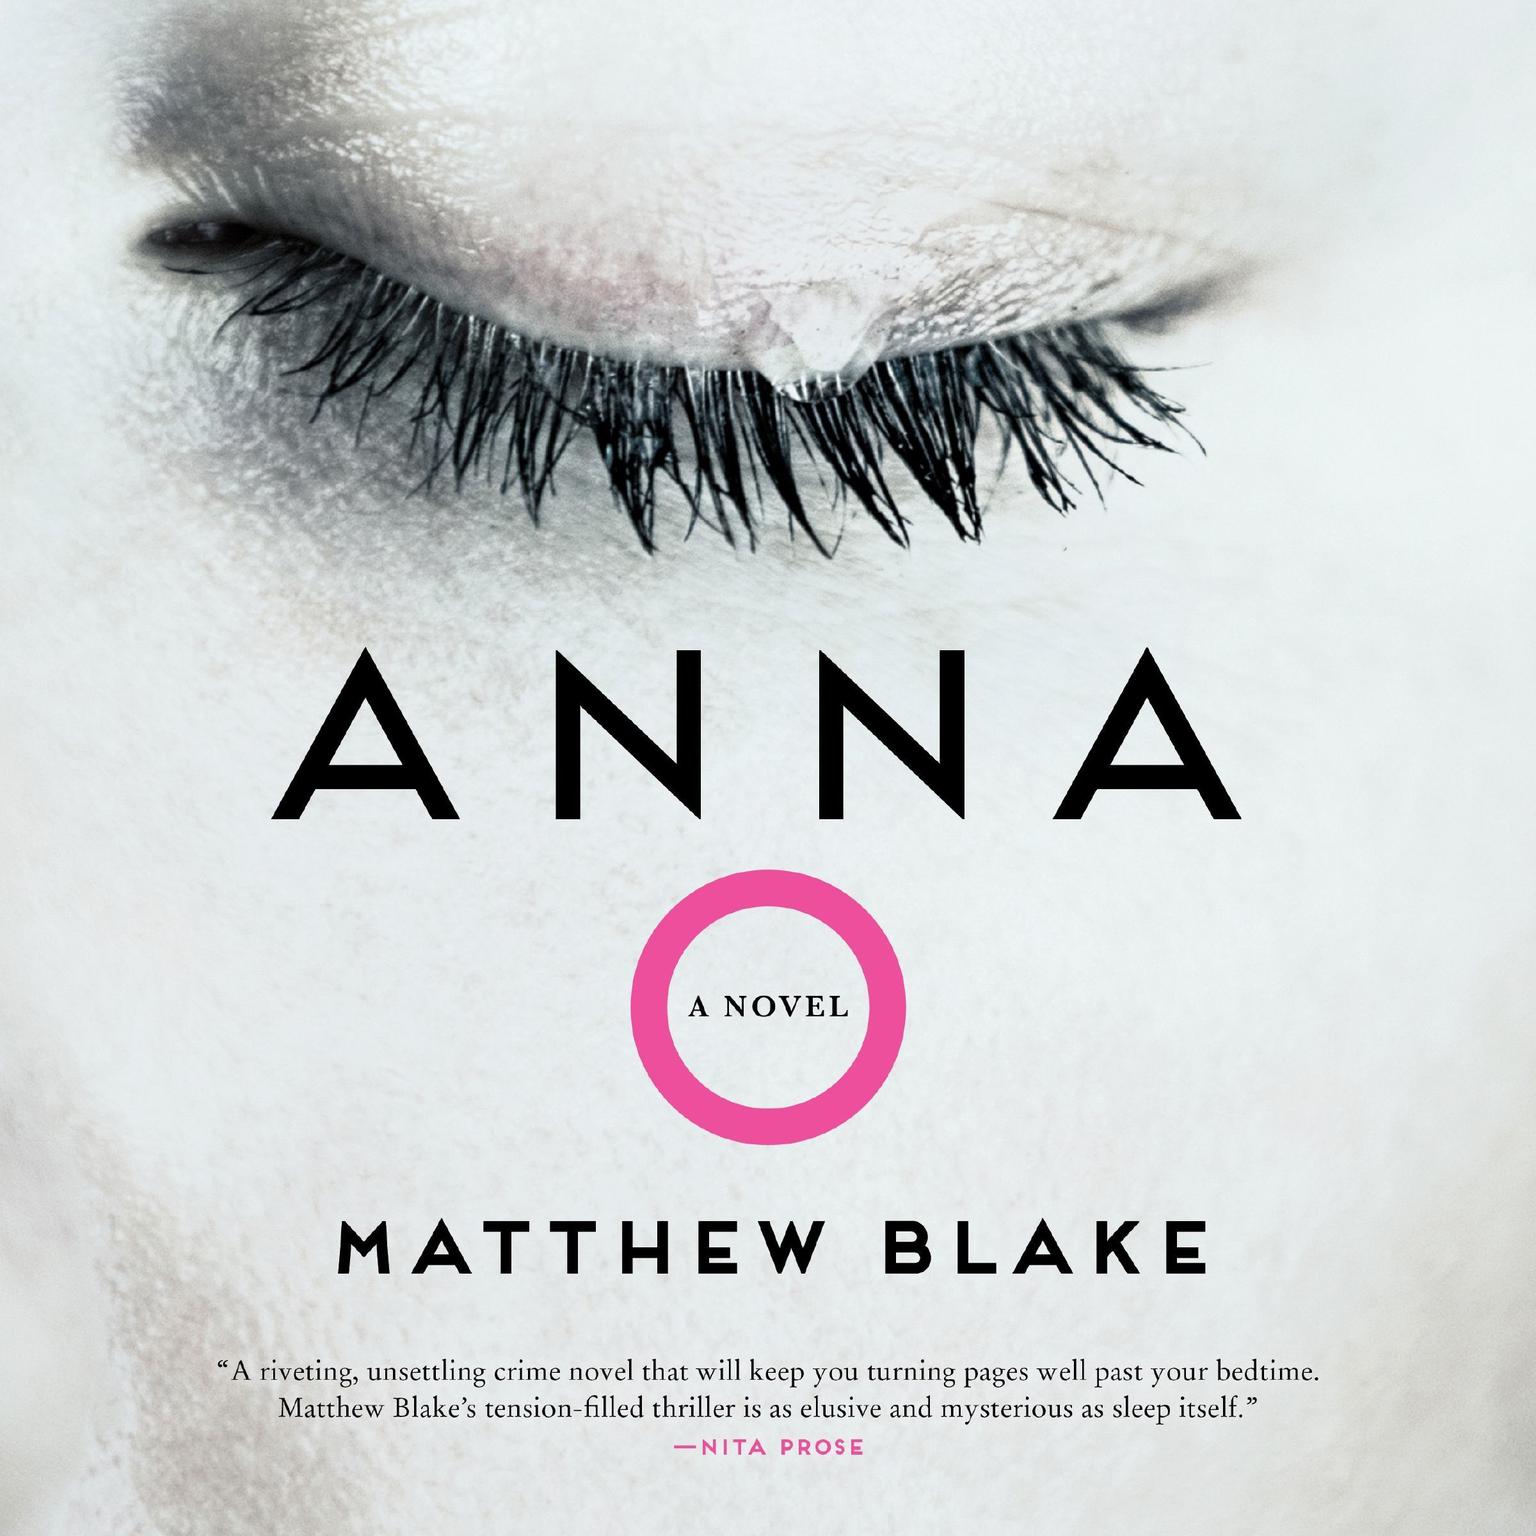 Anna O: A Novel Audiobook, by Matthew Blake